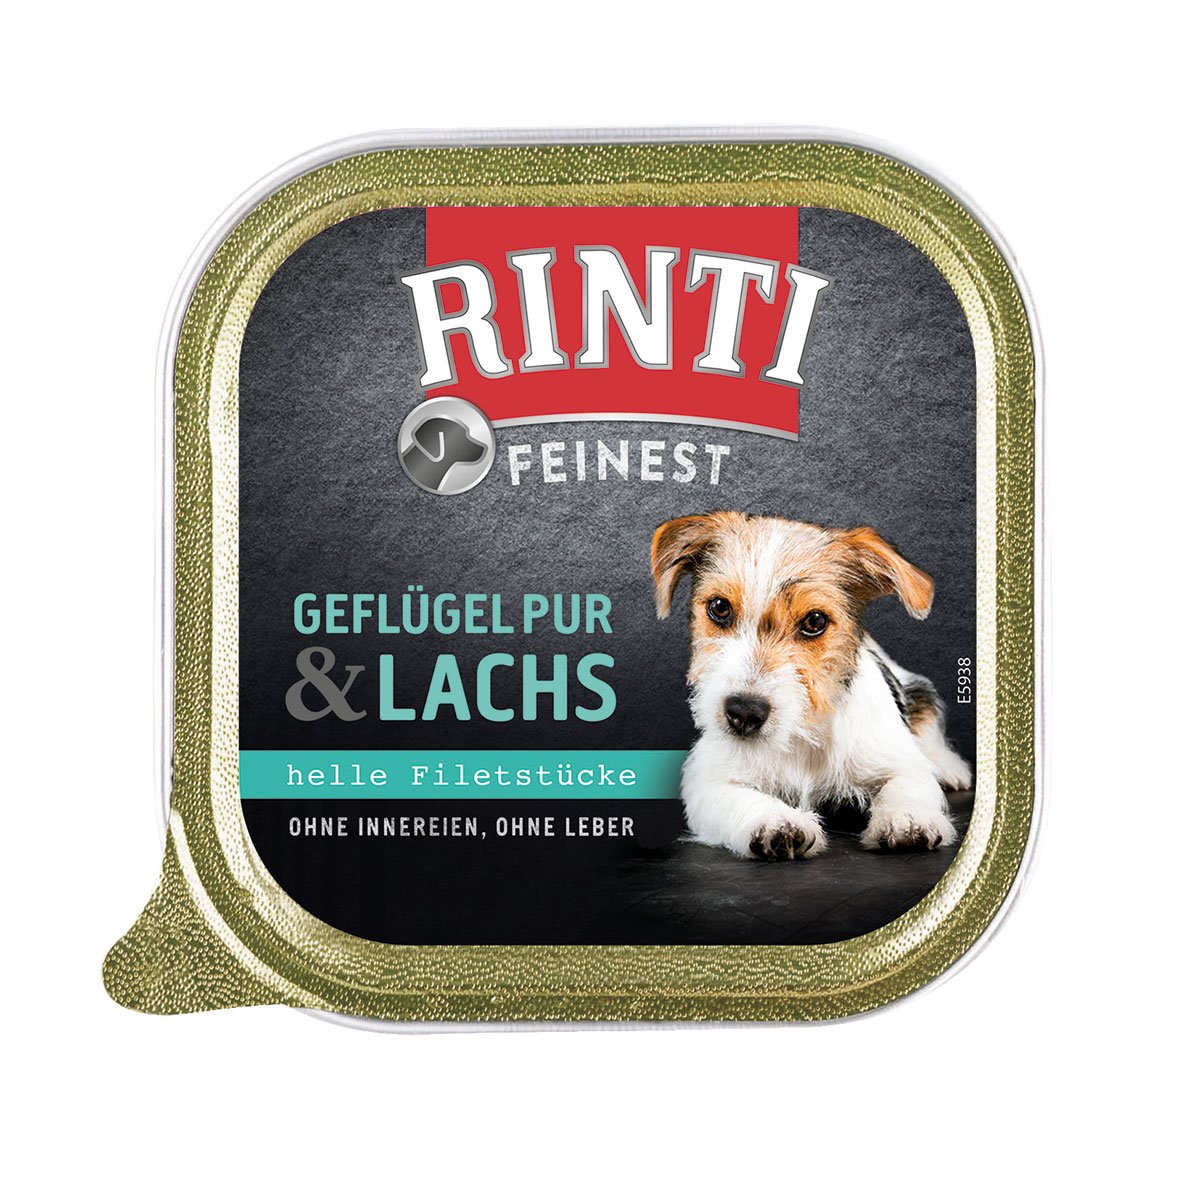 Rinti Feinest Geflügel pur & Lachs 44x150g